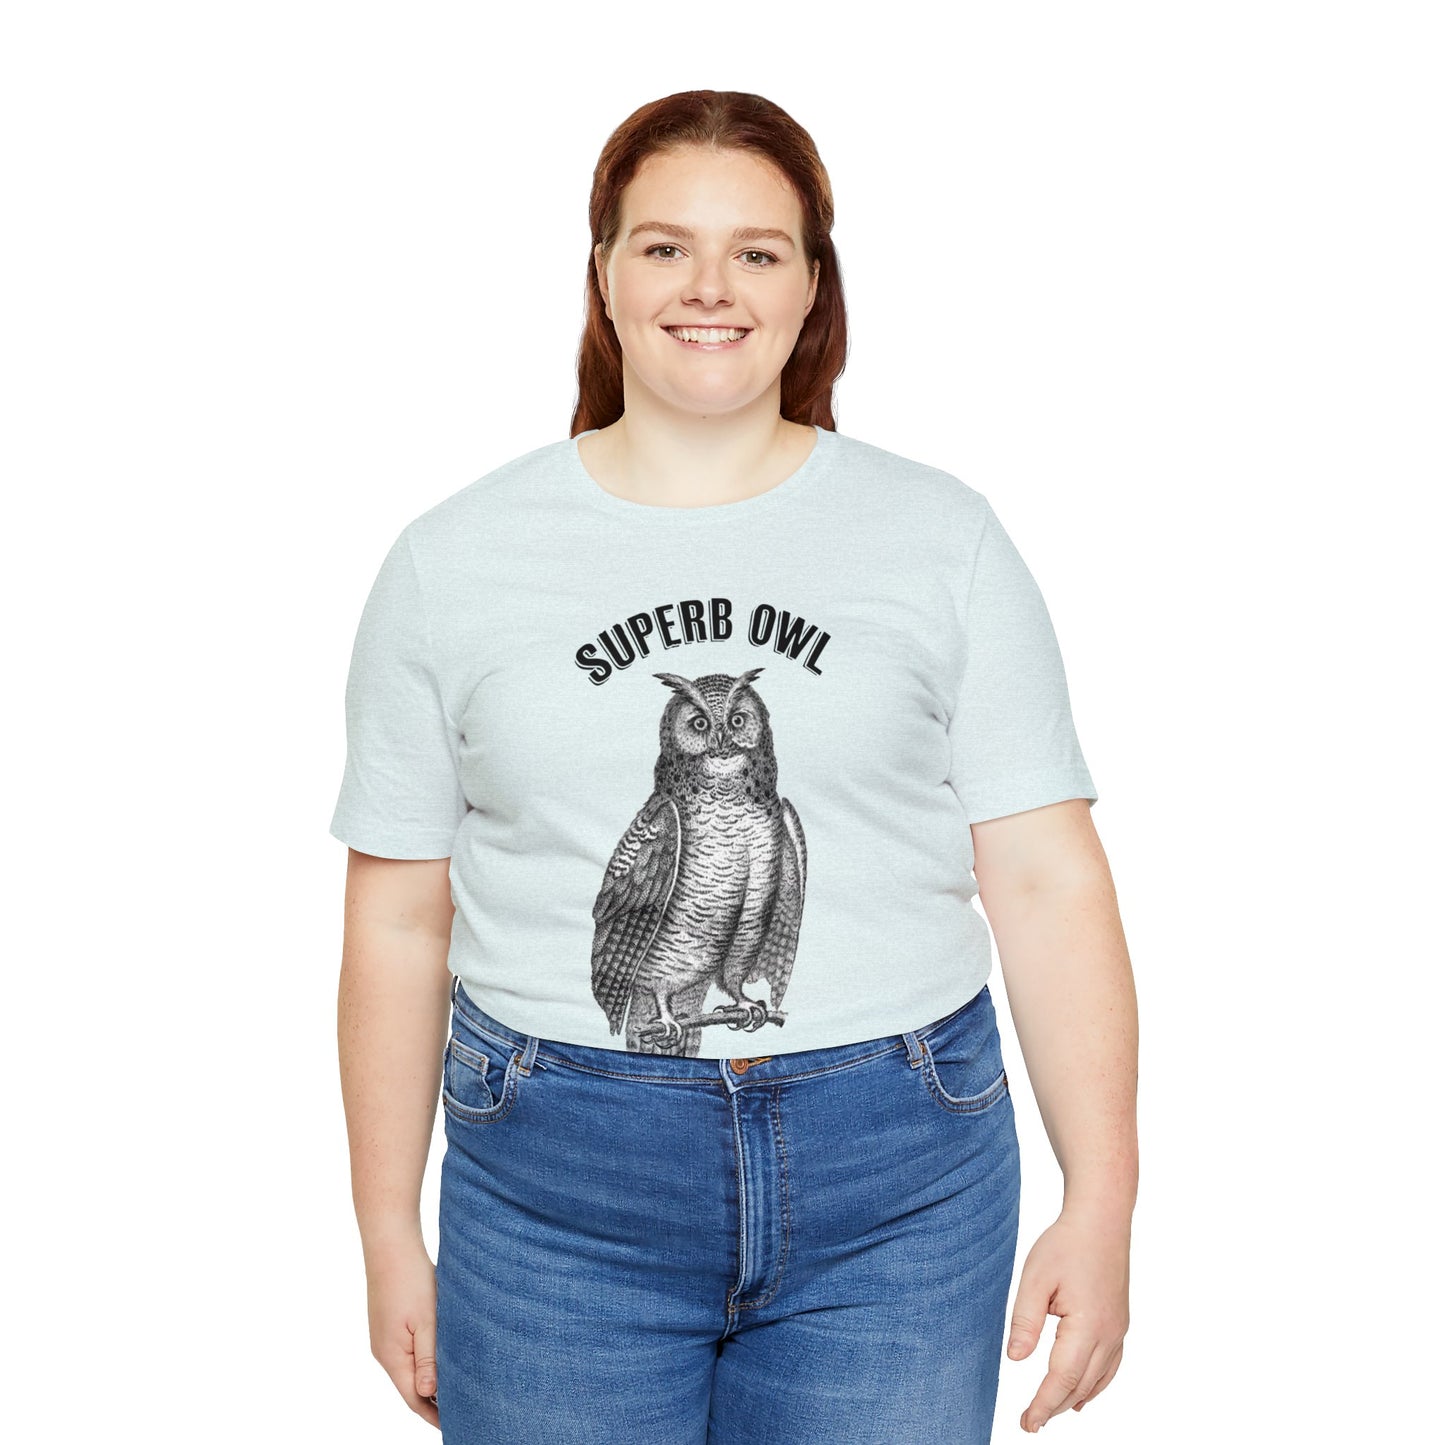 Superb Owl Sunday T-Shirt